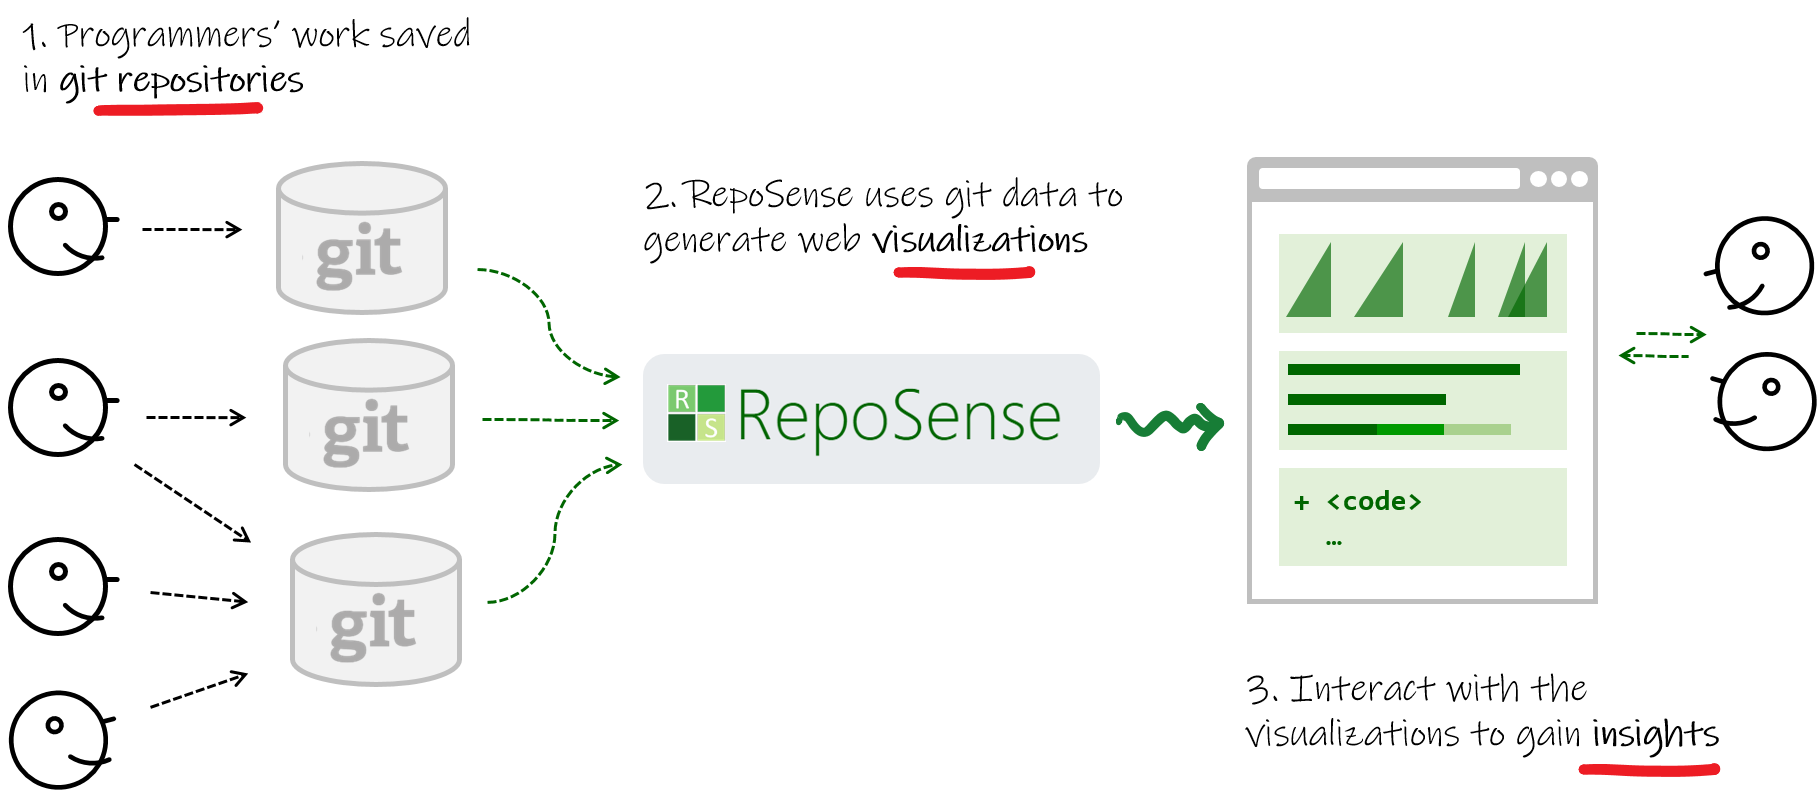 RepoSense overview